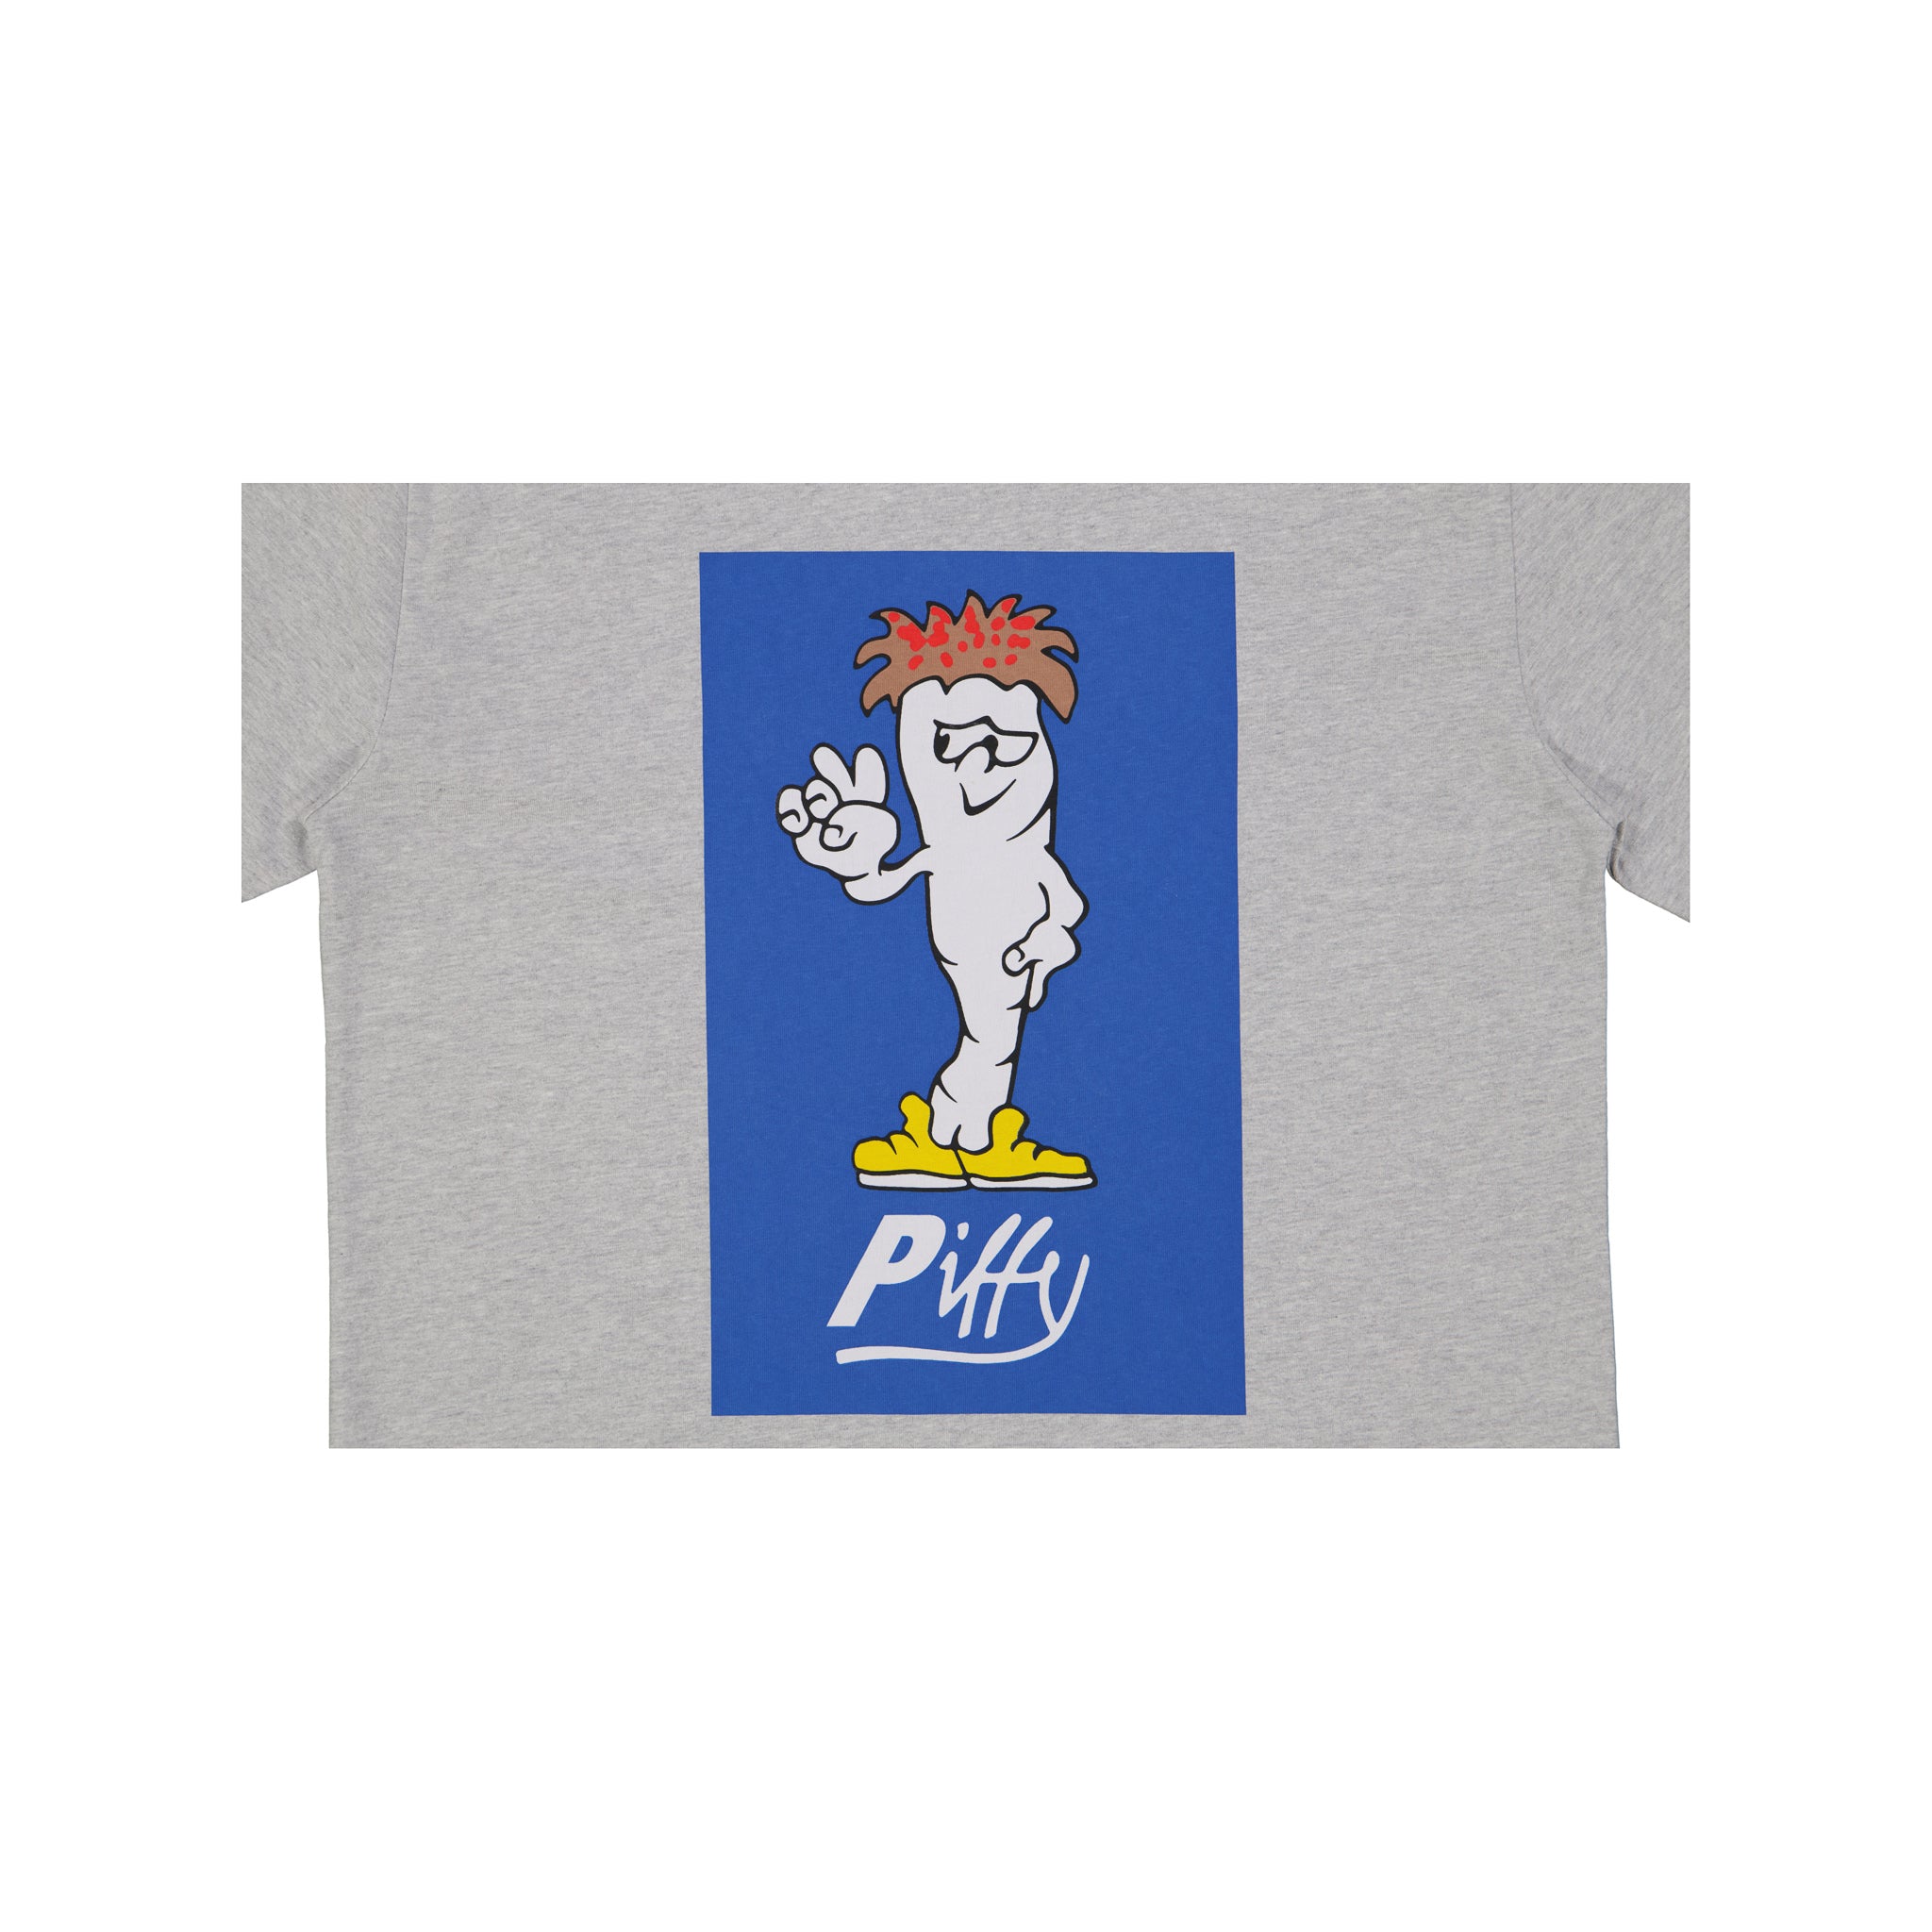 Palace Piffy T-Shirt Grey Marl - SPRMRKT